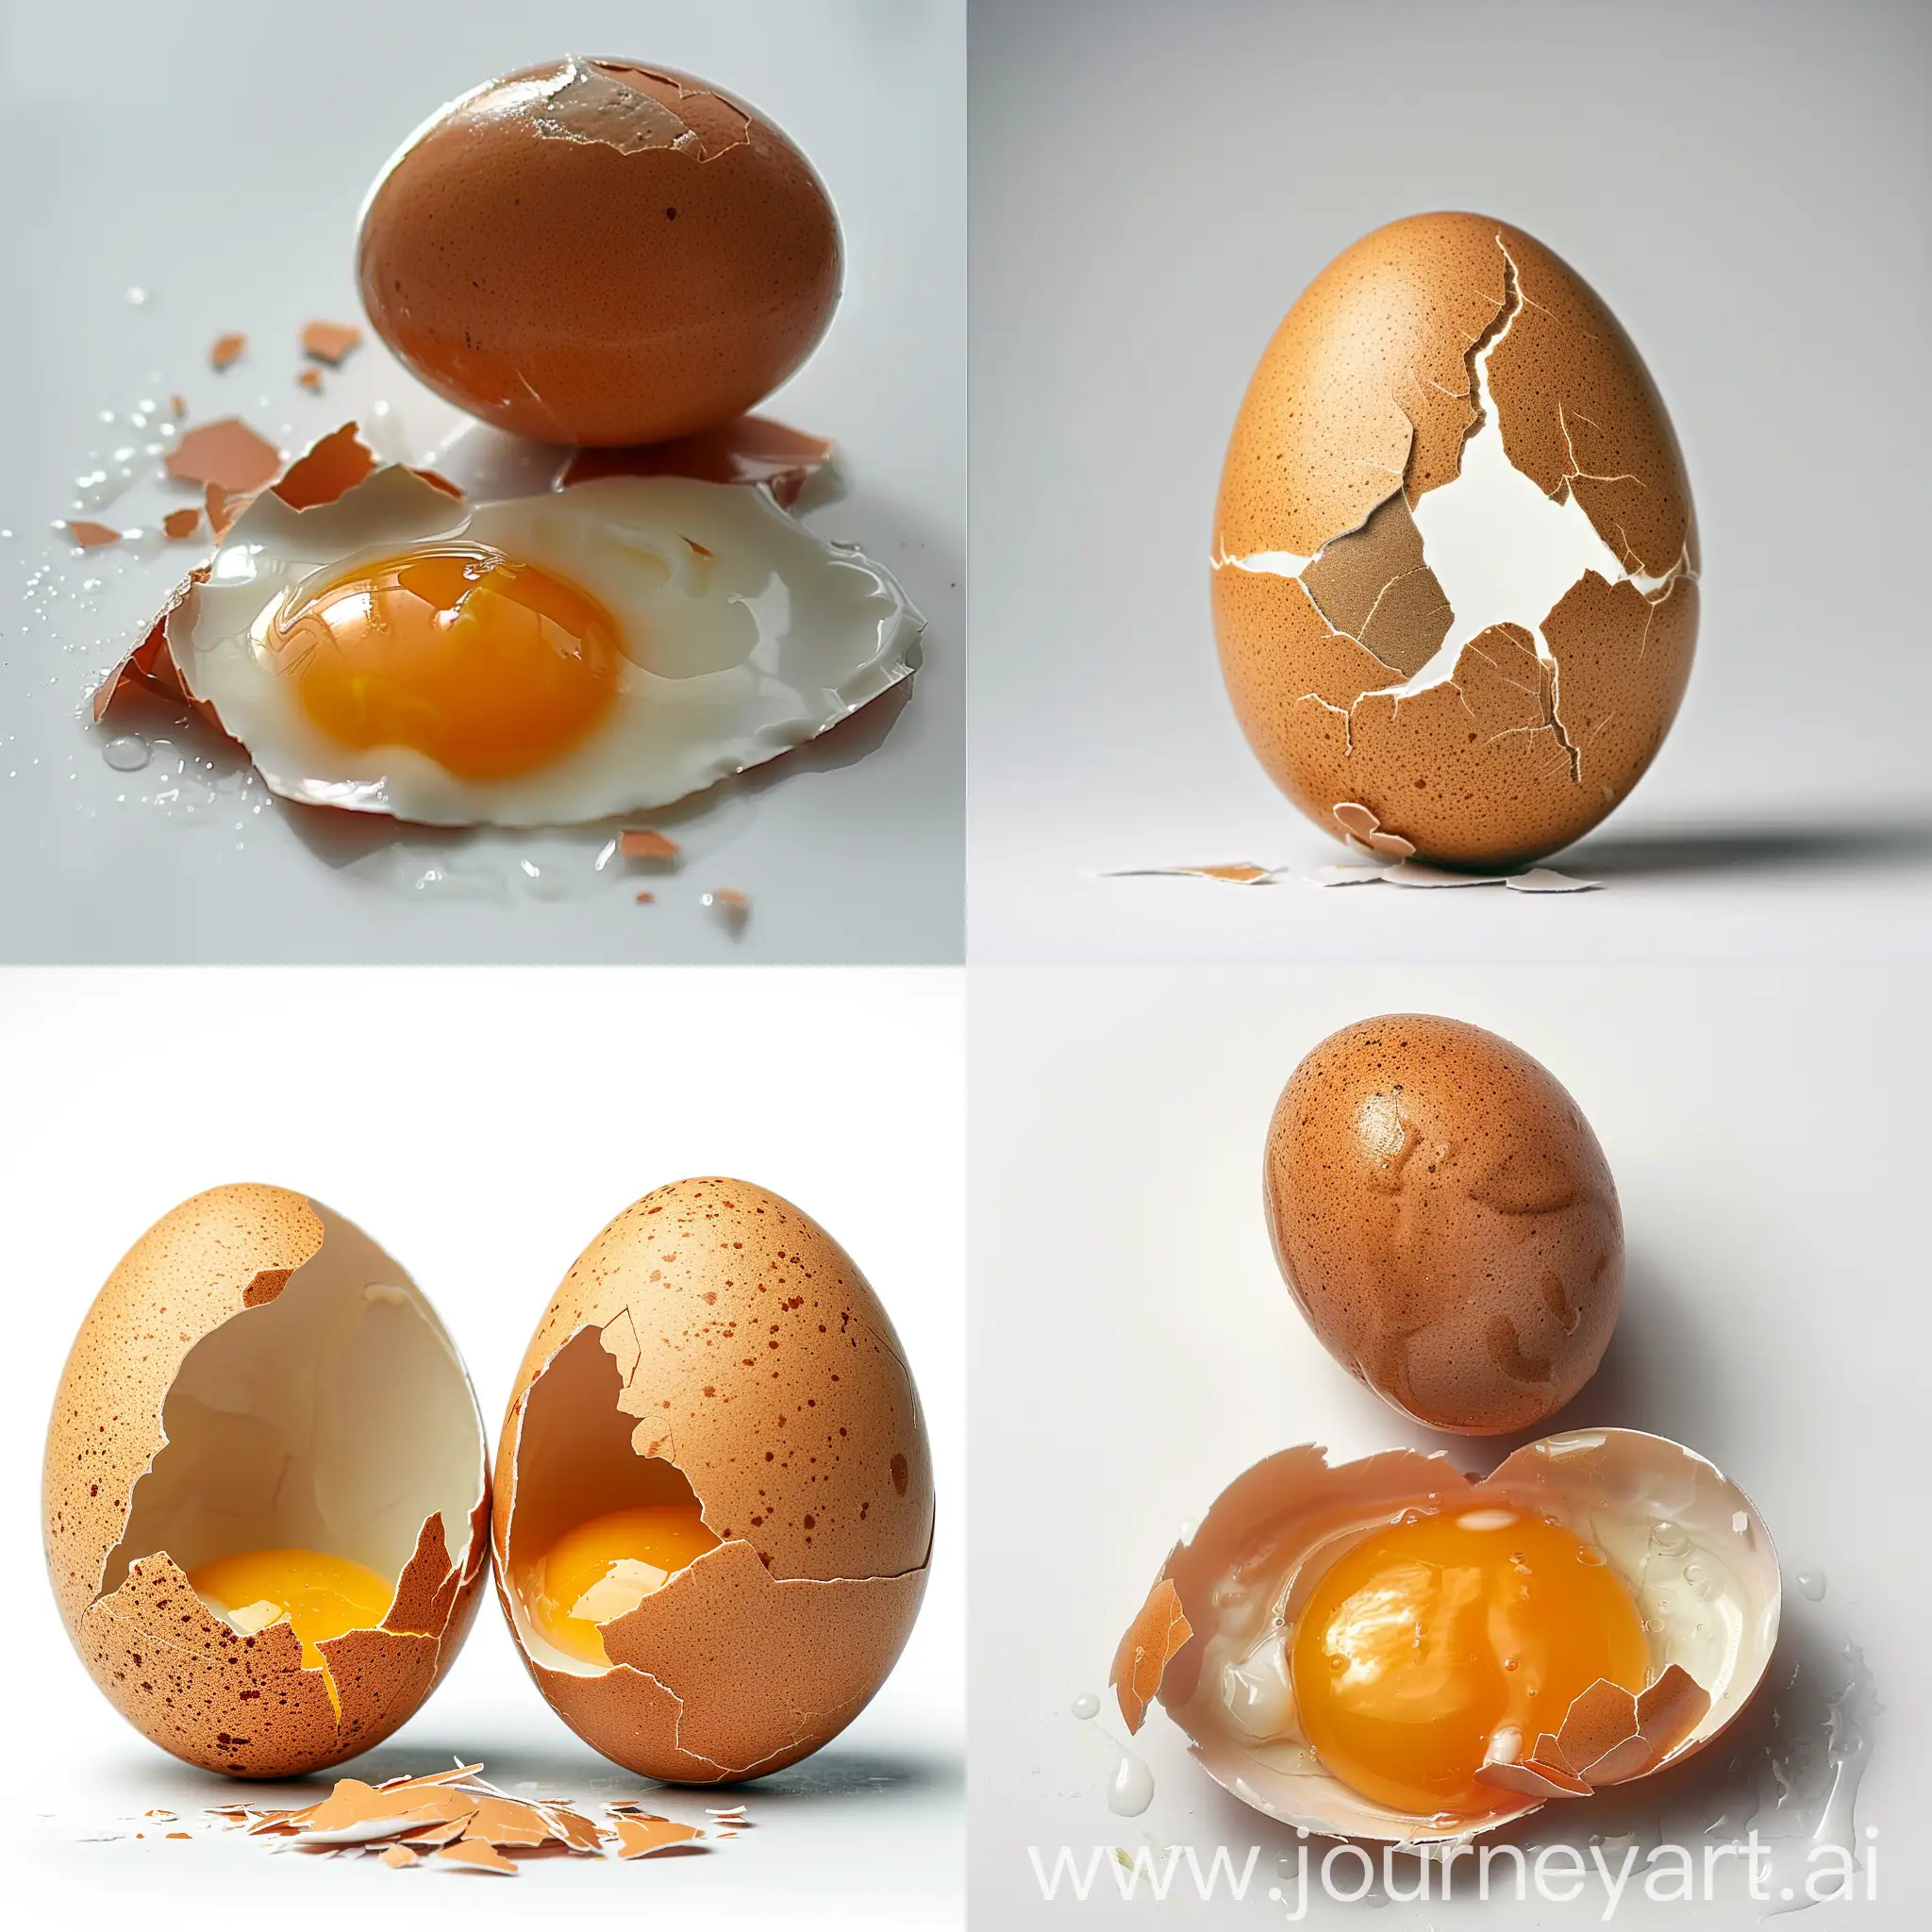 Broken egg two parts